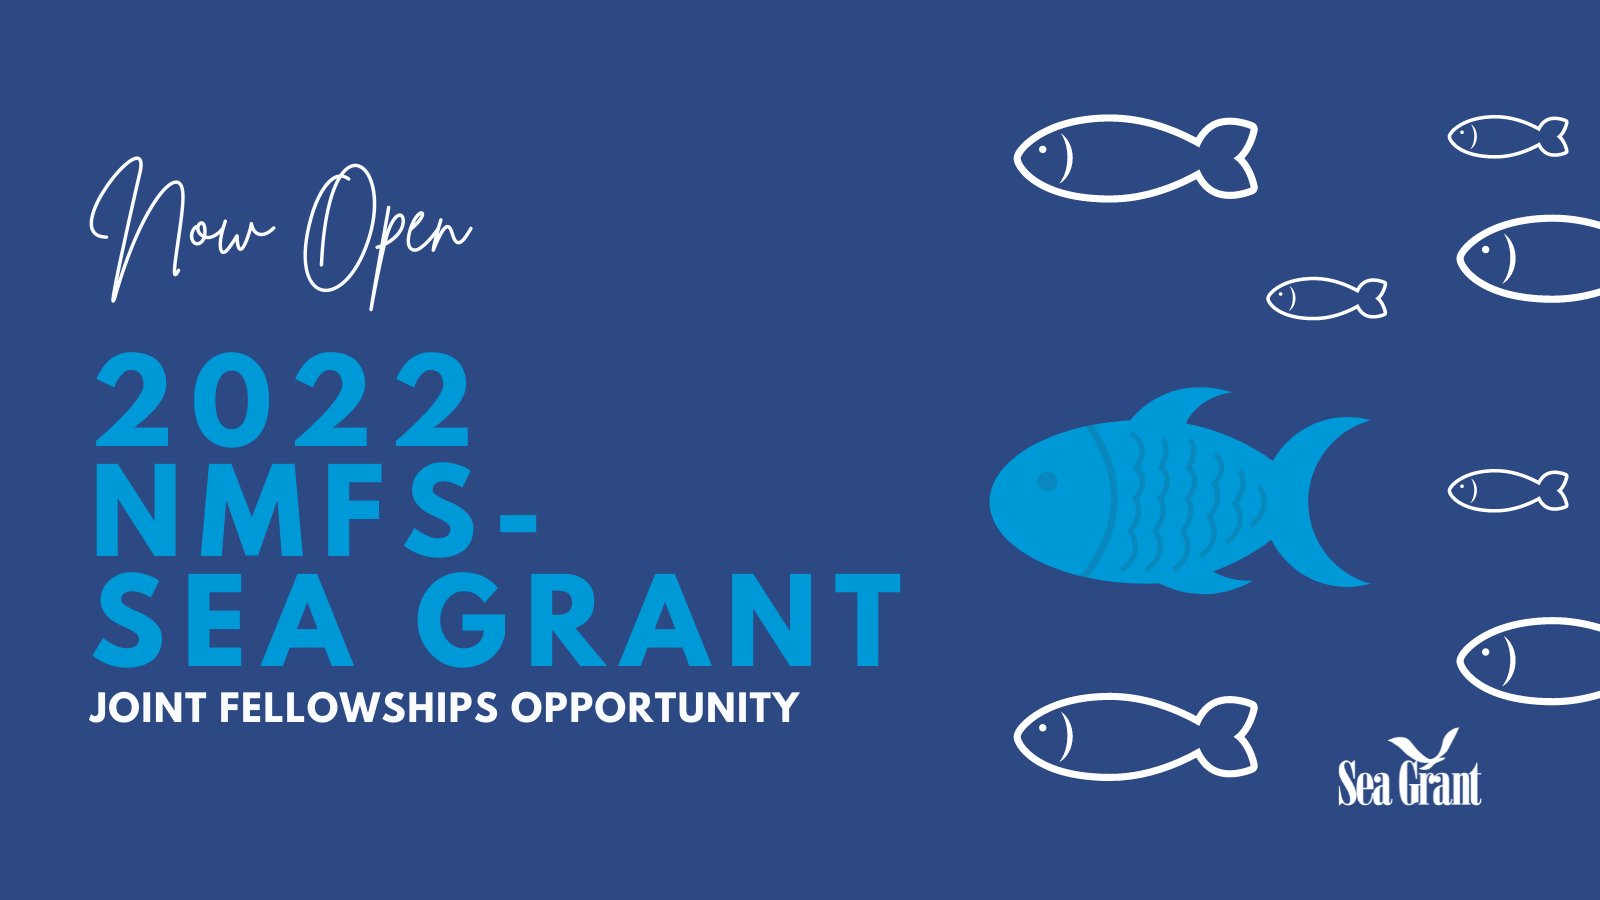 2022 NMFS-Sea Grant fellowship